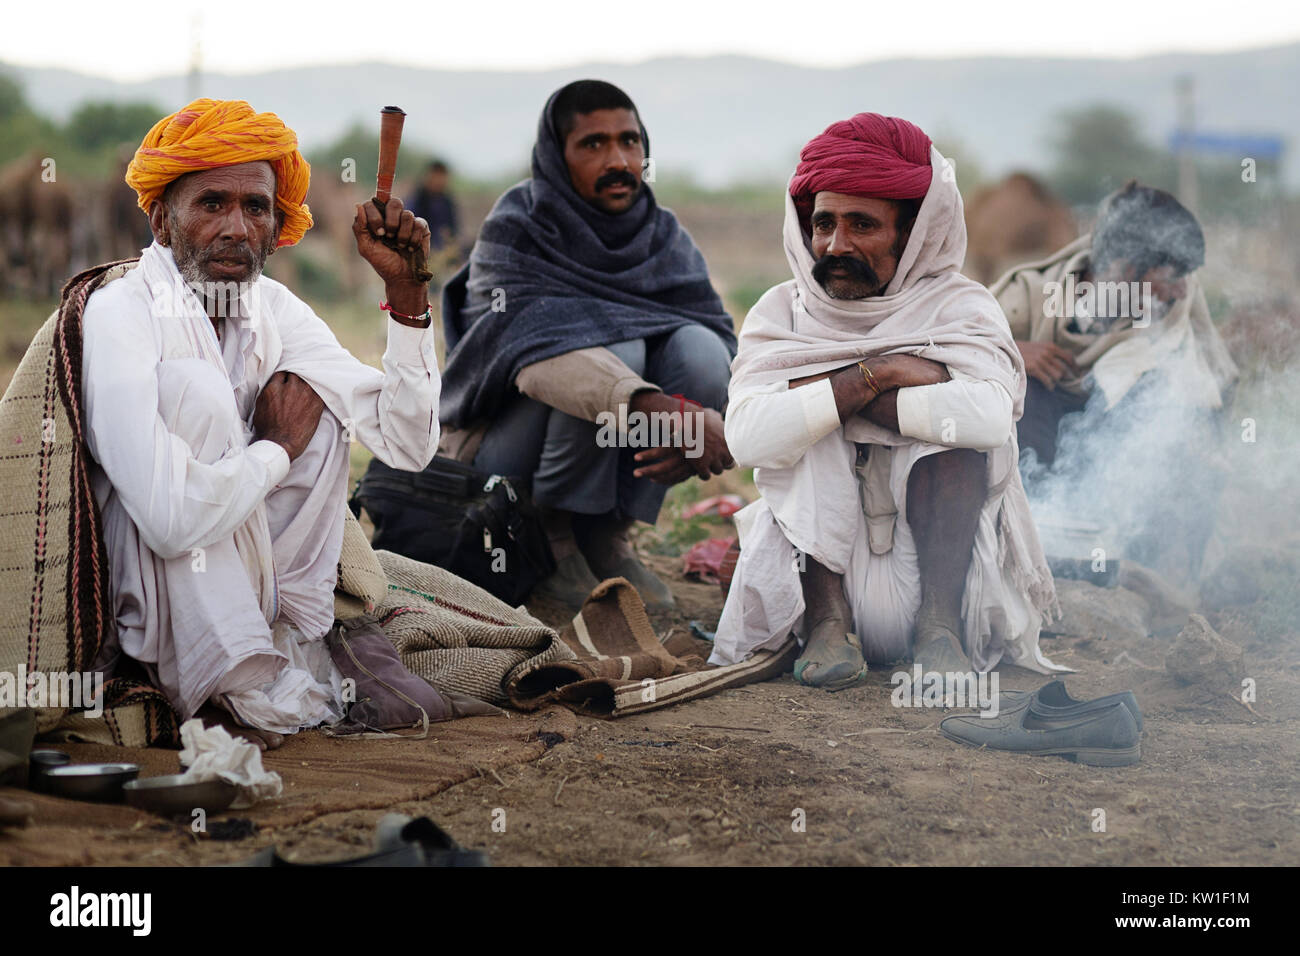 Scene at Pushkar Camel Fair, men in their morning routine bu the fireplace, smoking, Pushkar, Ajmer, Rajasthan, India Stock Photo